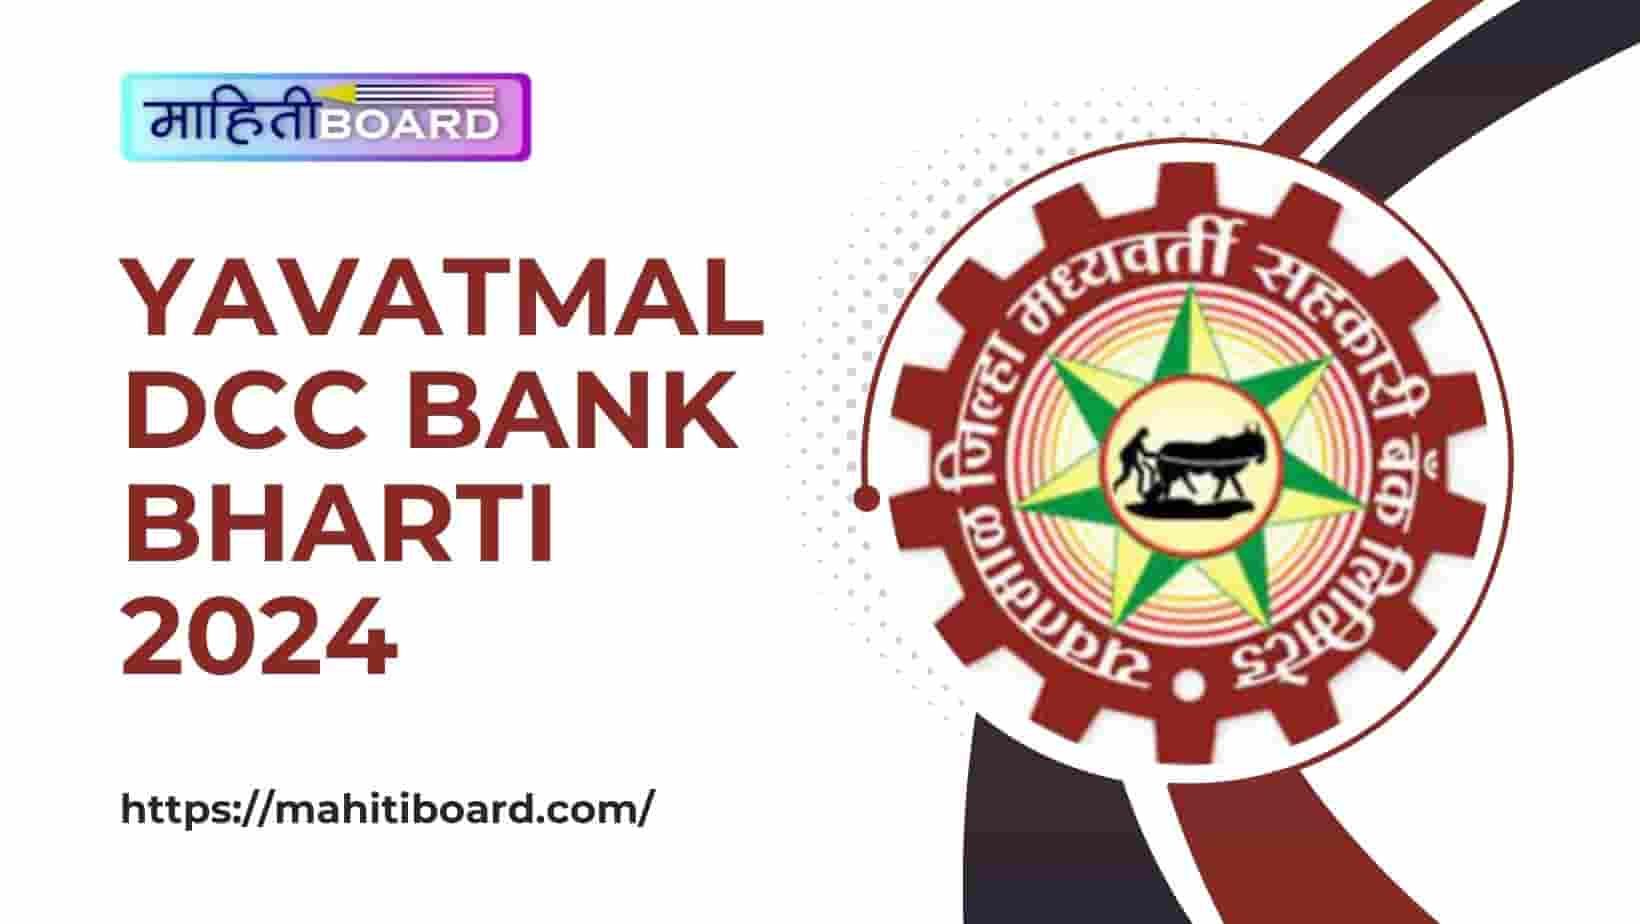 Yavatmal DCC Bank Bharti 2024